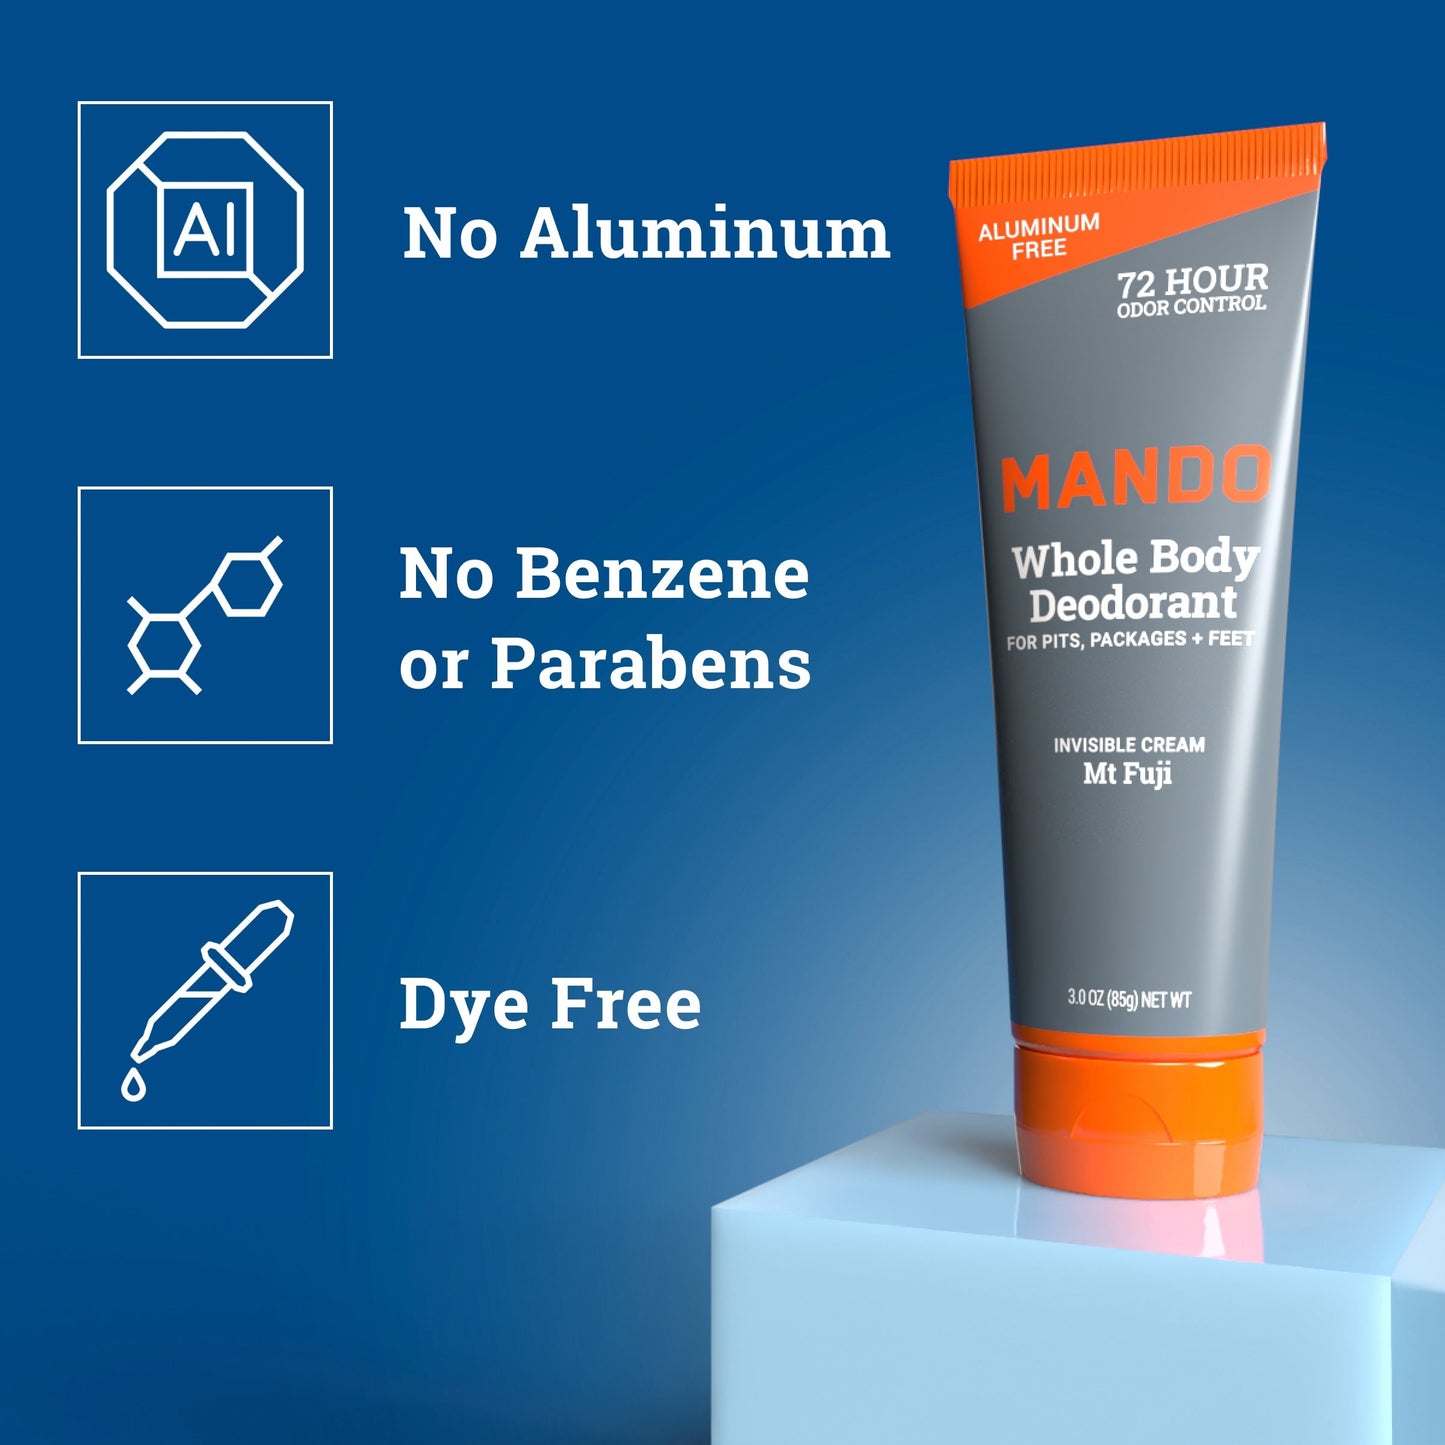 Mando Invisible cream deodorant in mt fuji scent with text: No Aluminum, No Benzene or Parabens, Bye Free